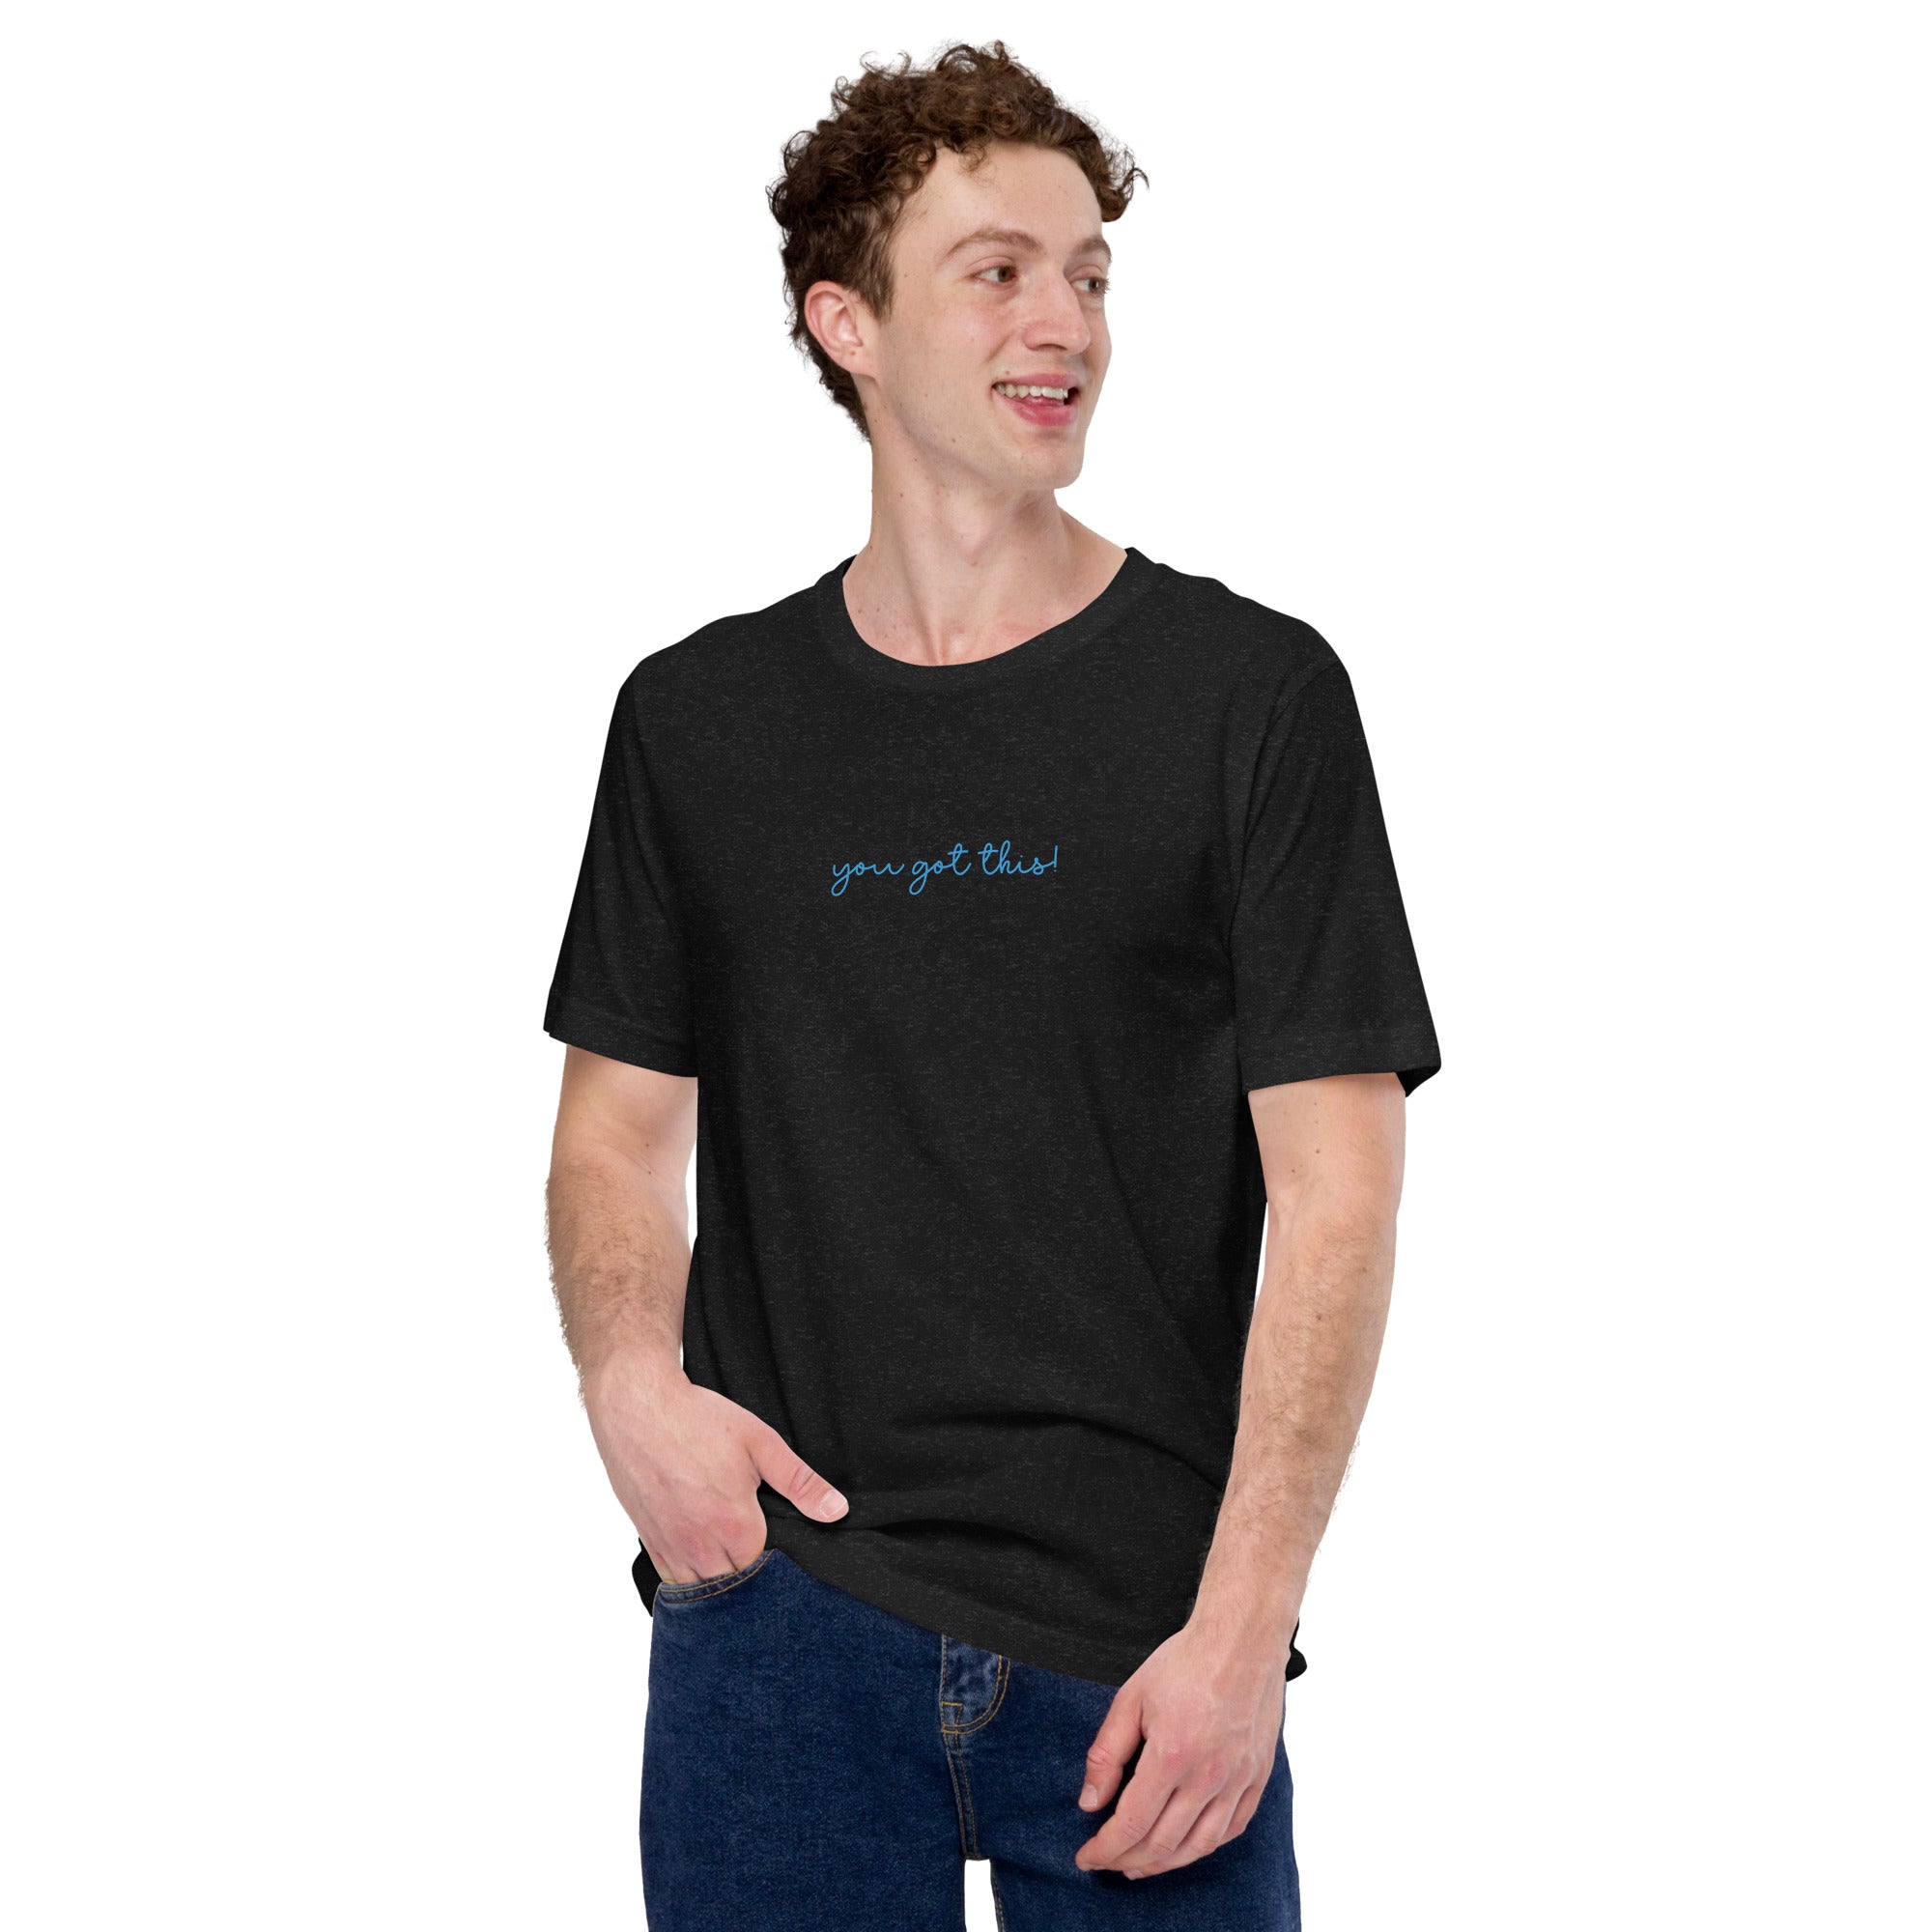 You Got This, Premium Short-Sleeve Unisex T-Shirt | Positive Affirmation Tee